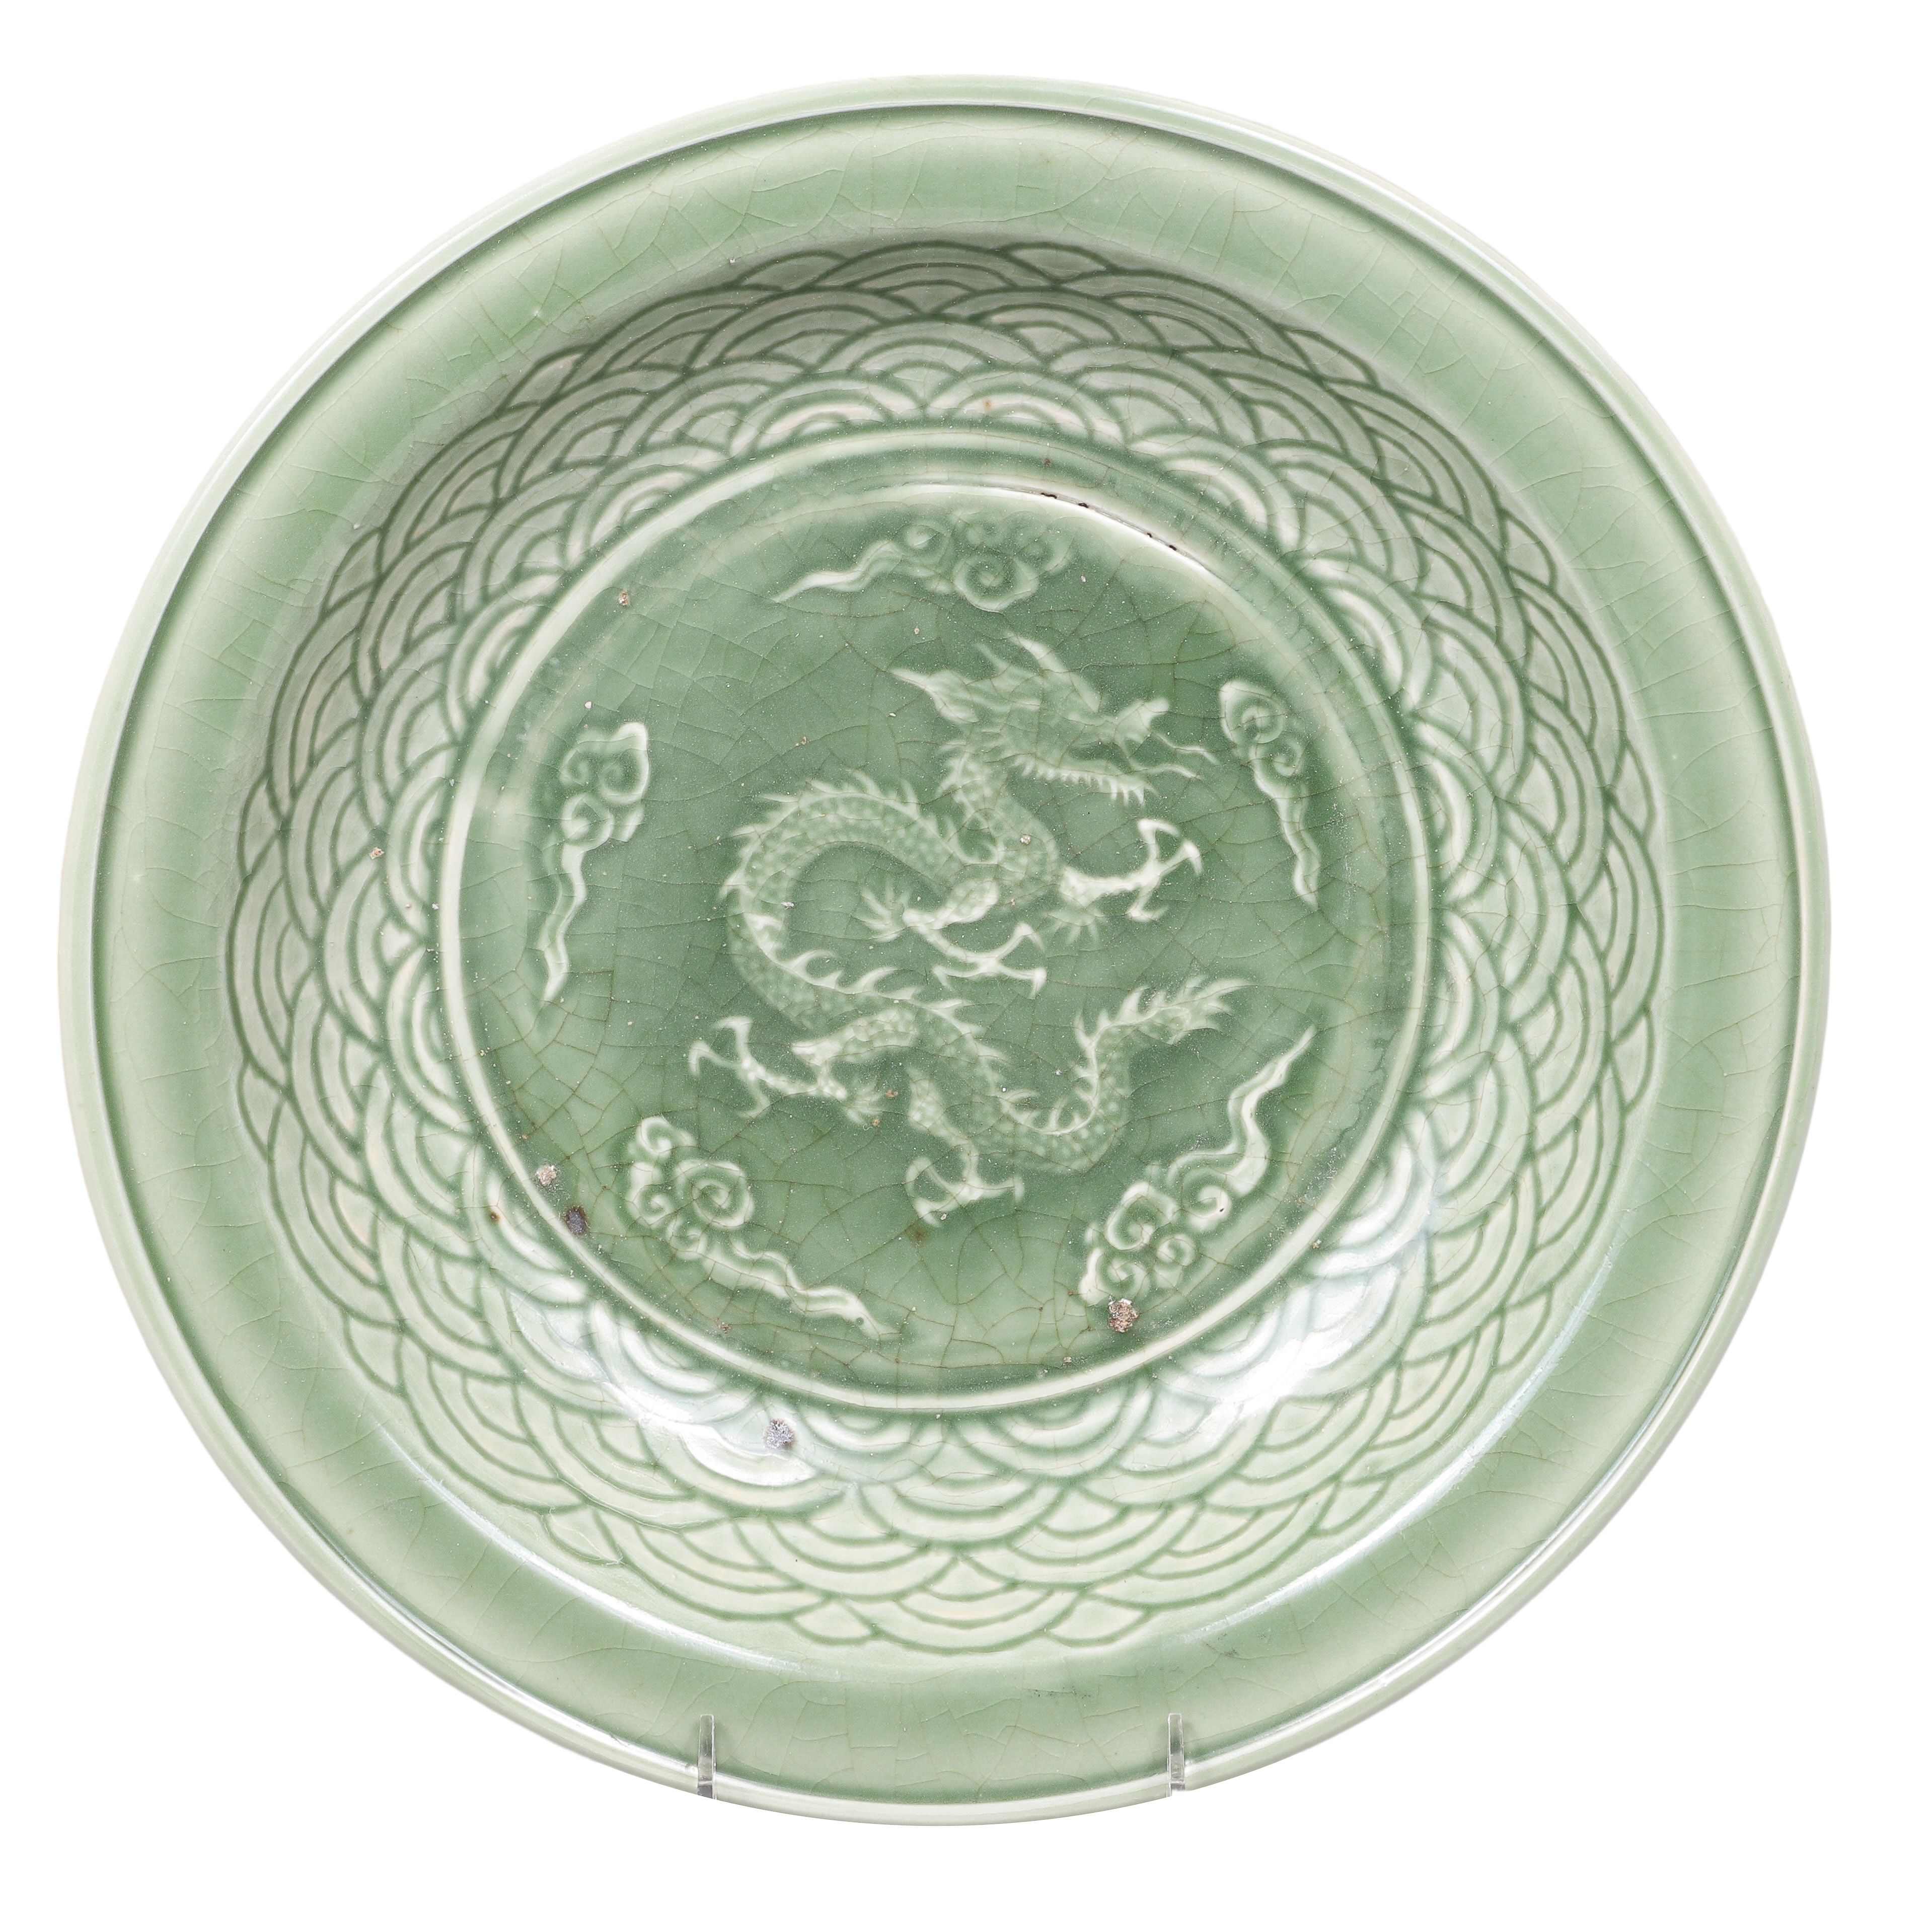 Green glazed Chinese porcelain